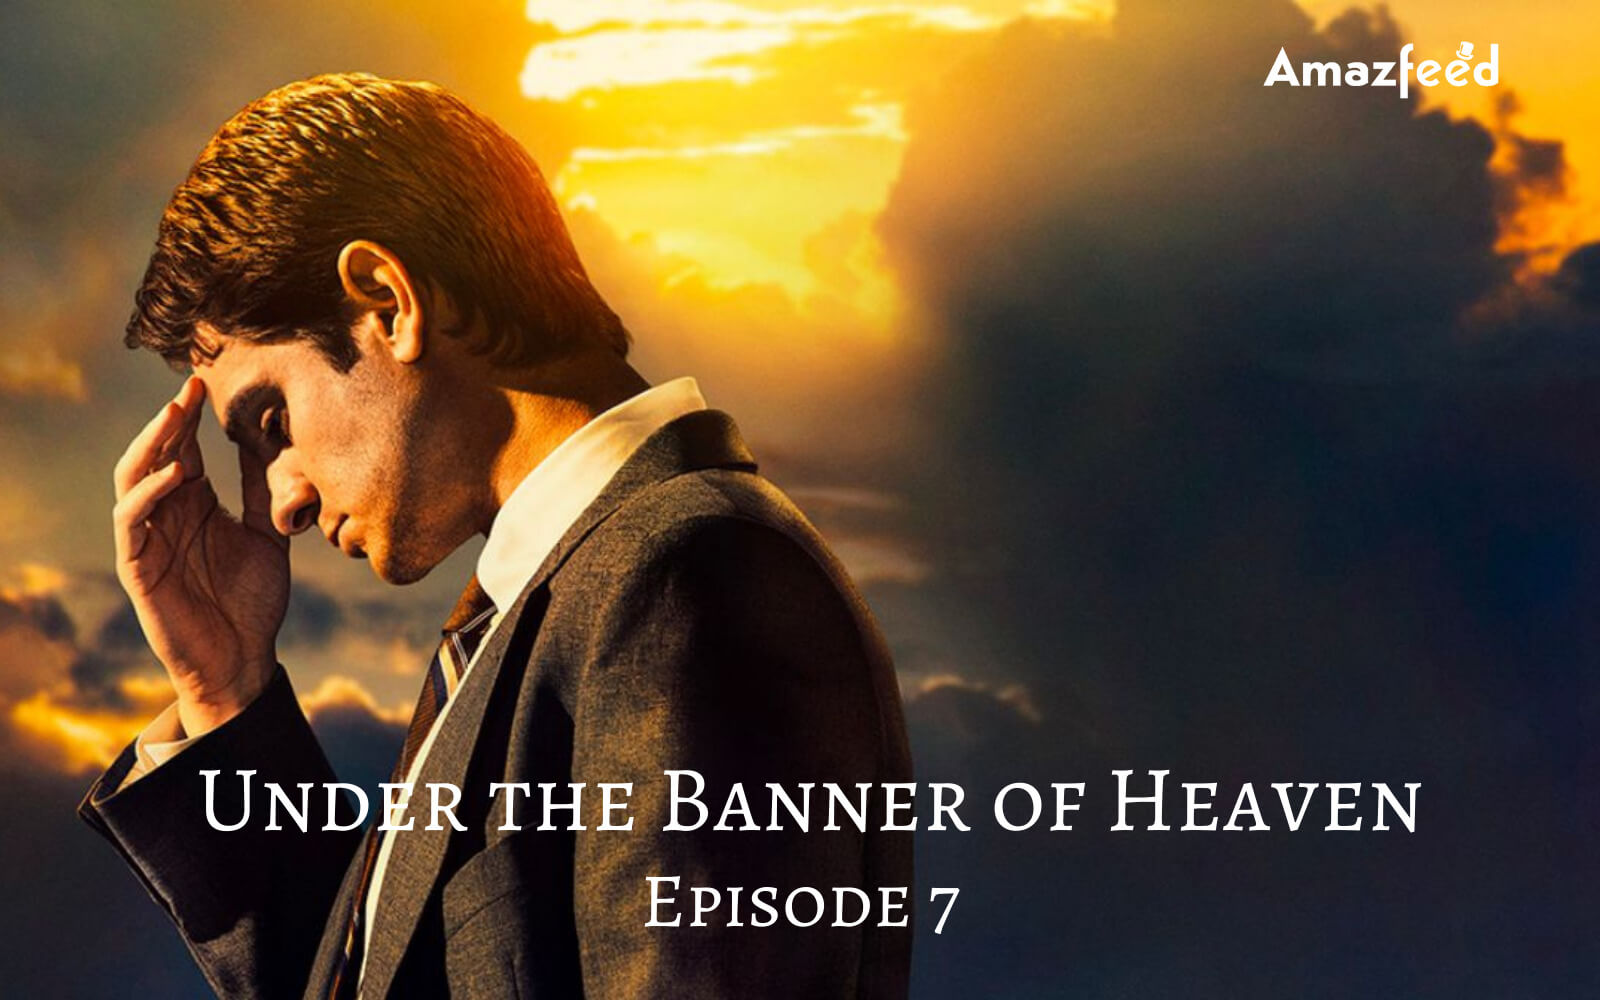 Under the Banner of Heaven Season 1 Episode 7 Release date